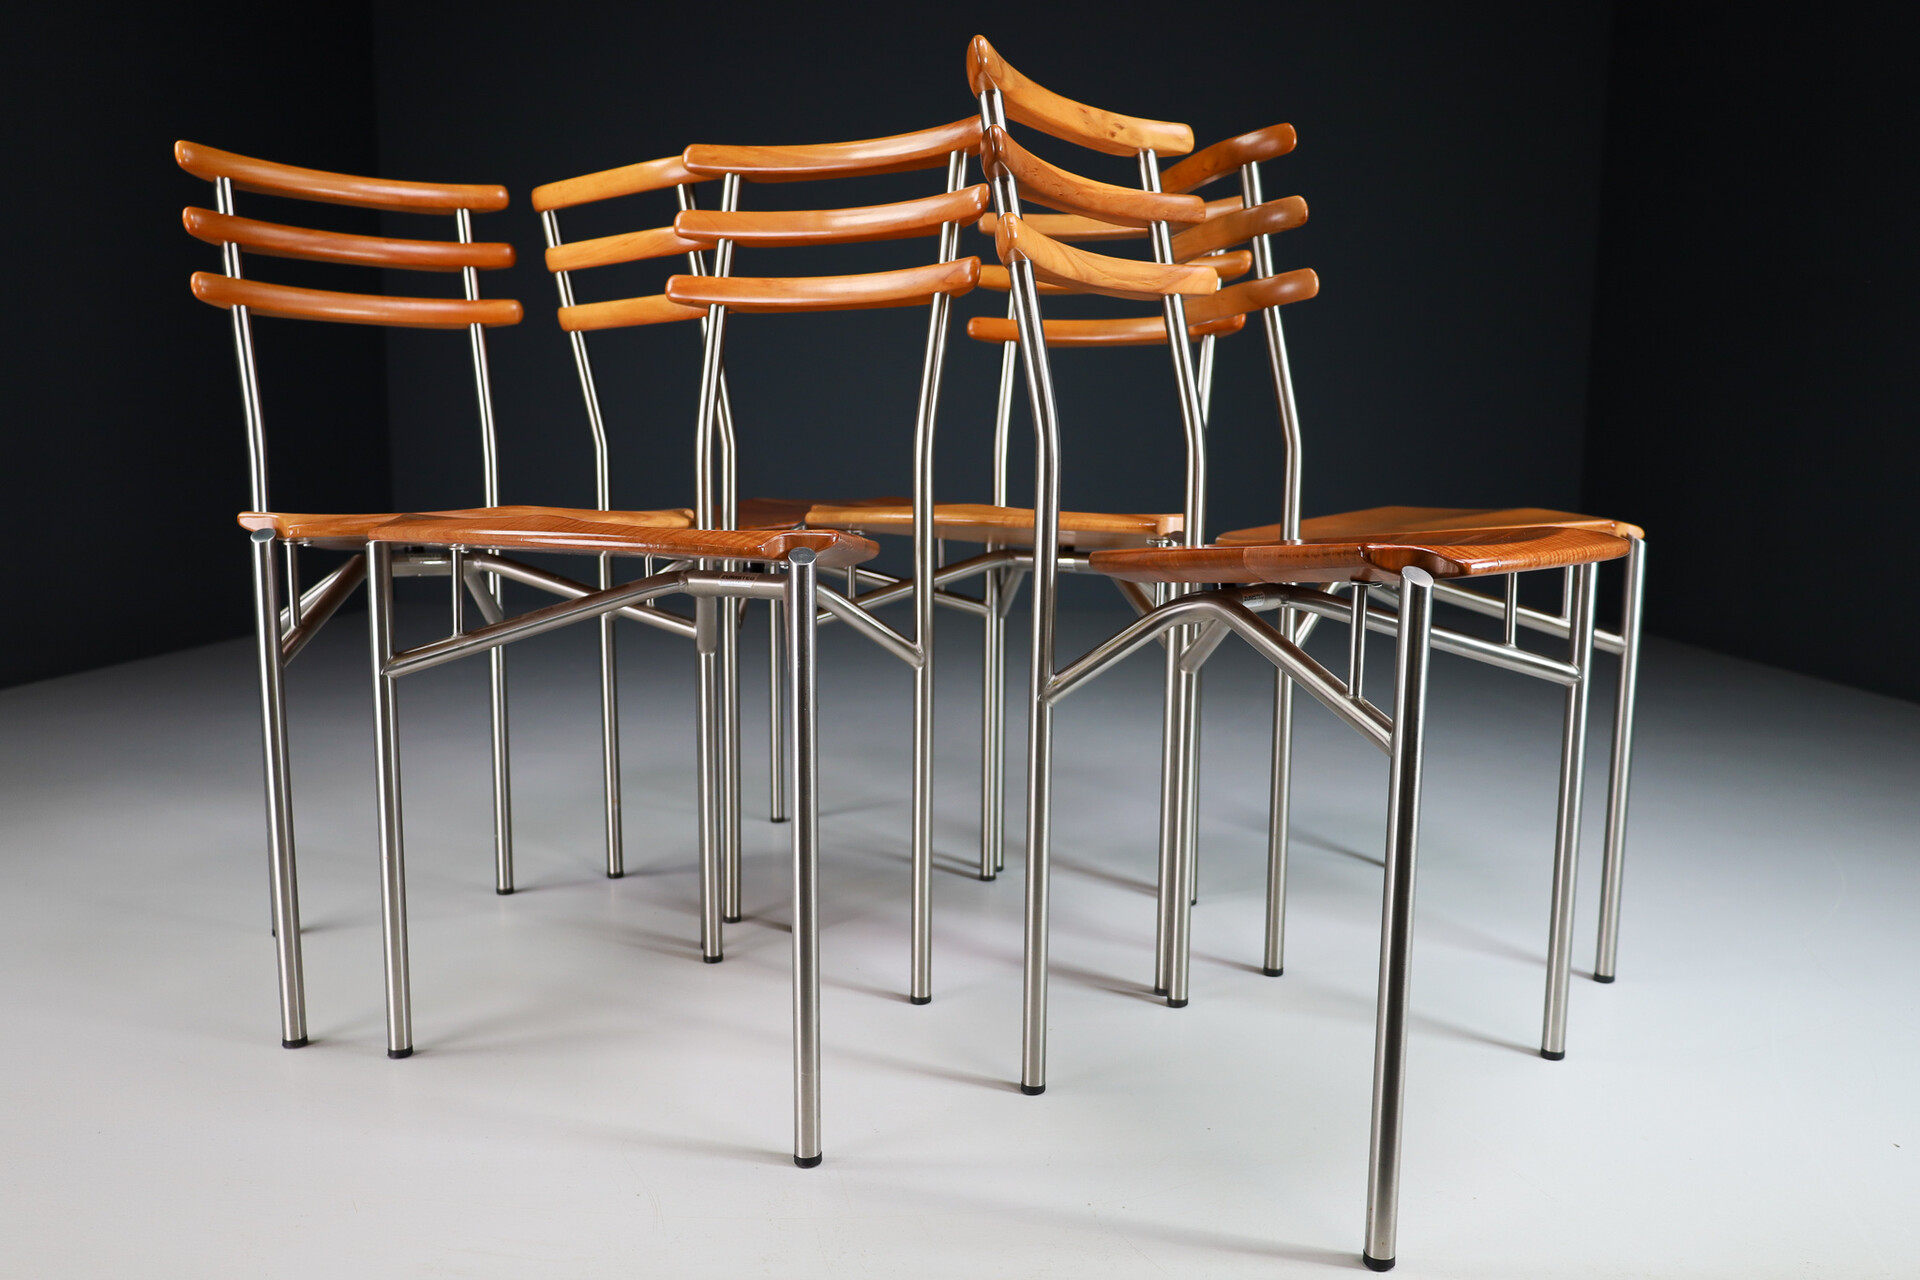 1970s chairs, Davidowski - Sold Collection Late-20th Modern 6 Cristian Erker Set - dining century Zumsteg Switzerland